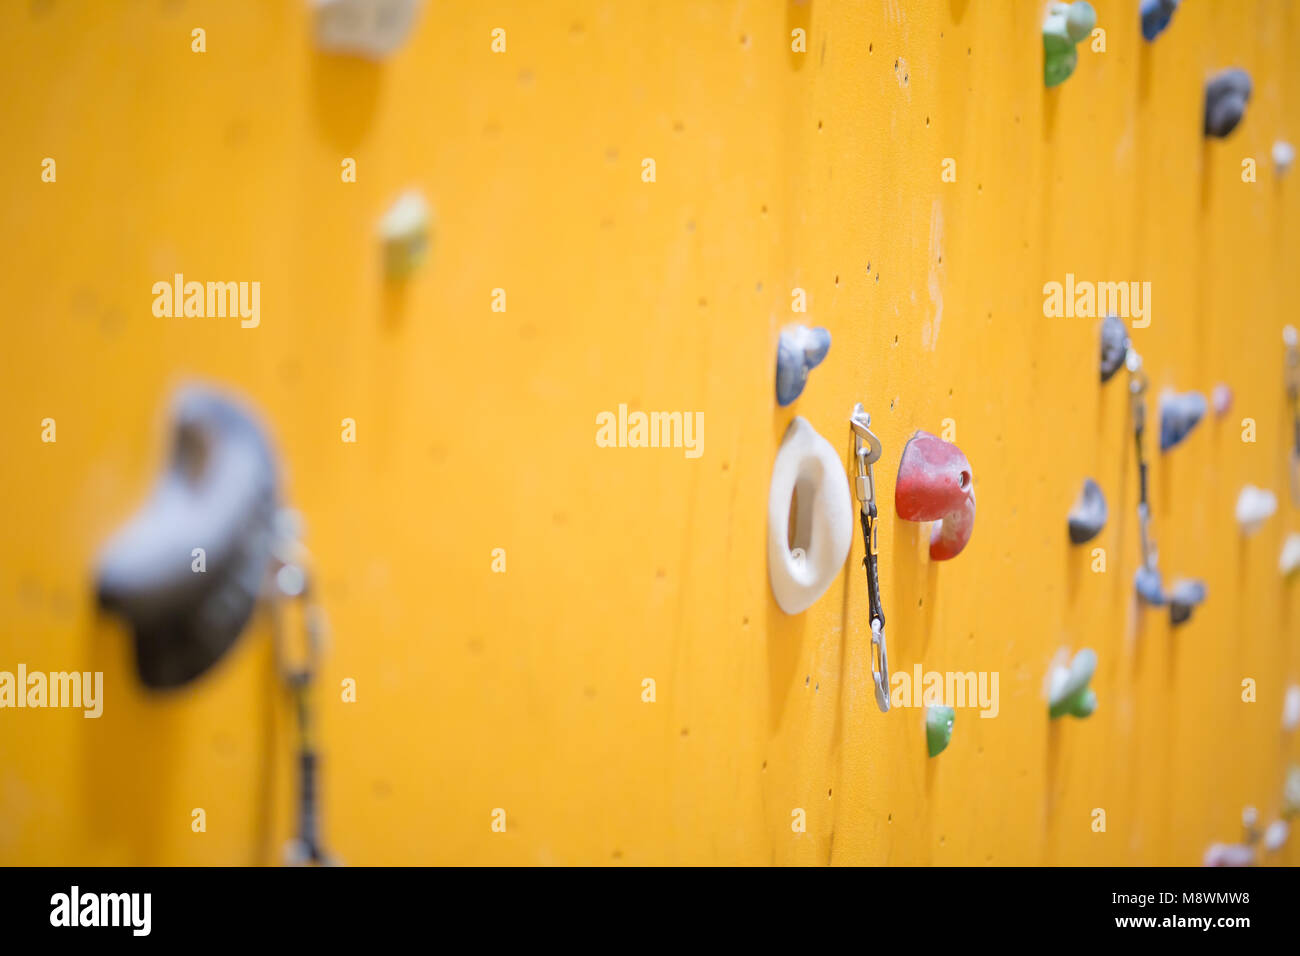 Climbing Wall. Climbing wall with colorful rocks. Stock Photo